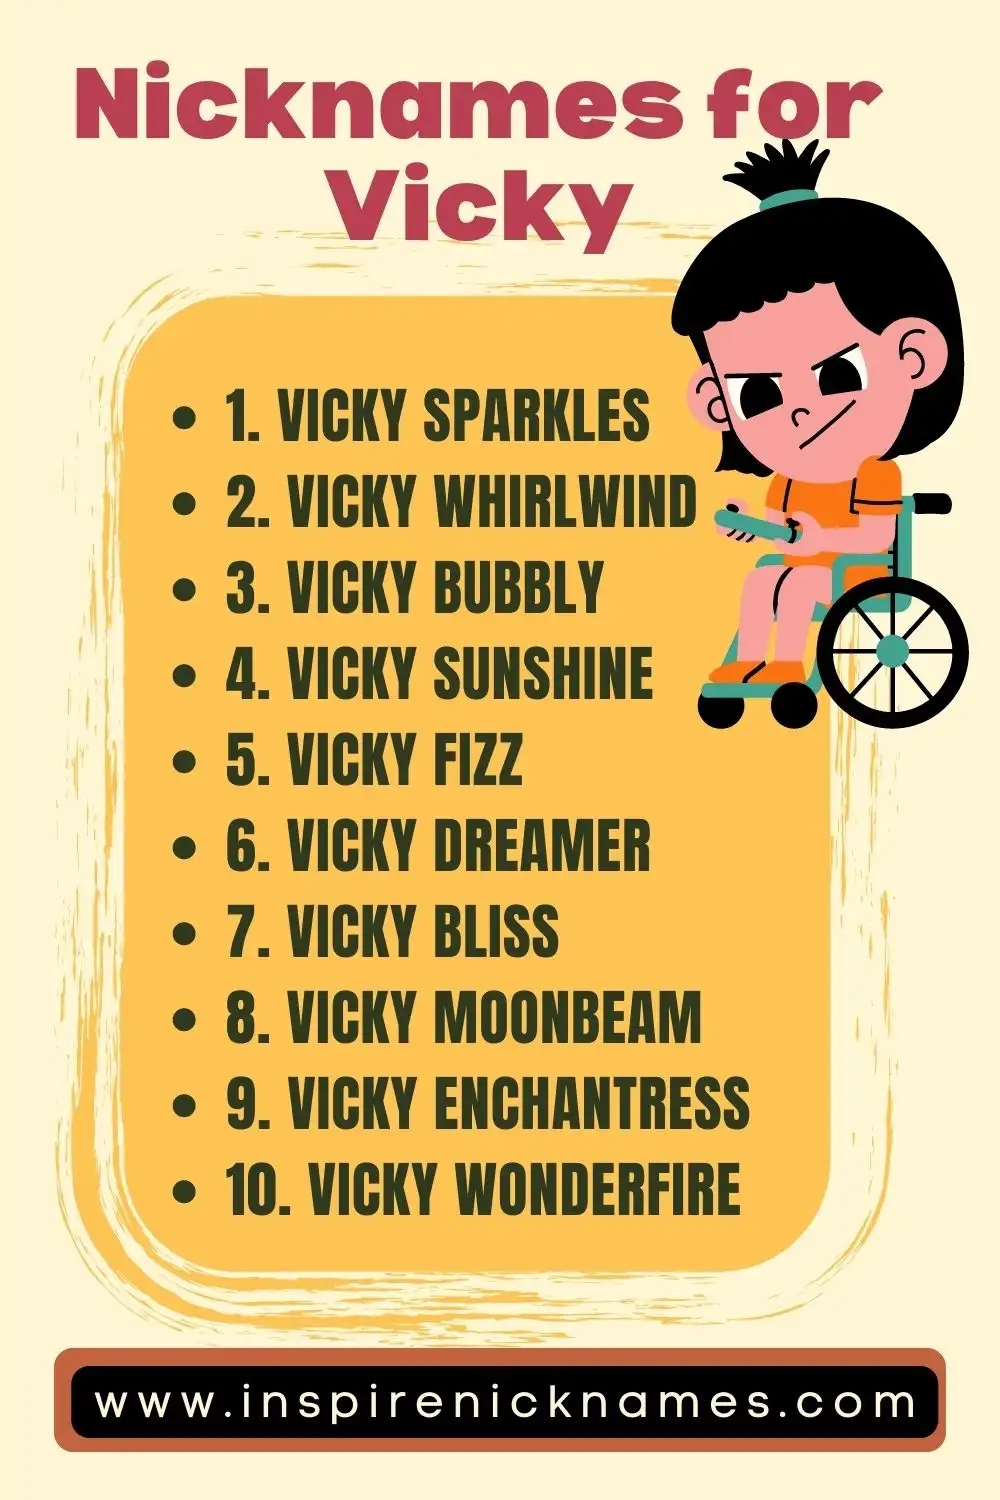 Nicknames for Vicky list ideas